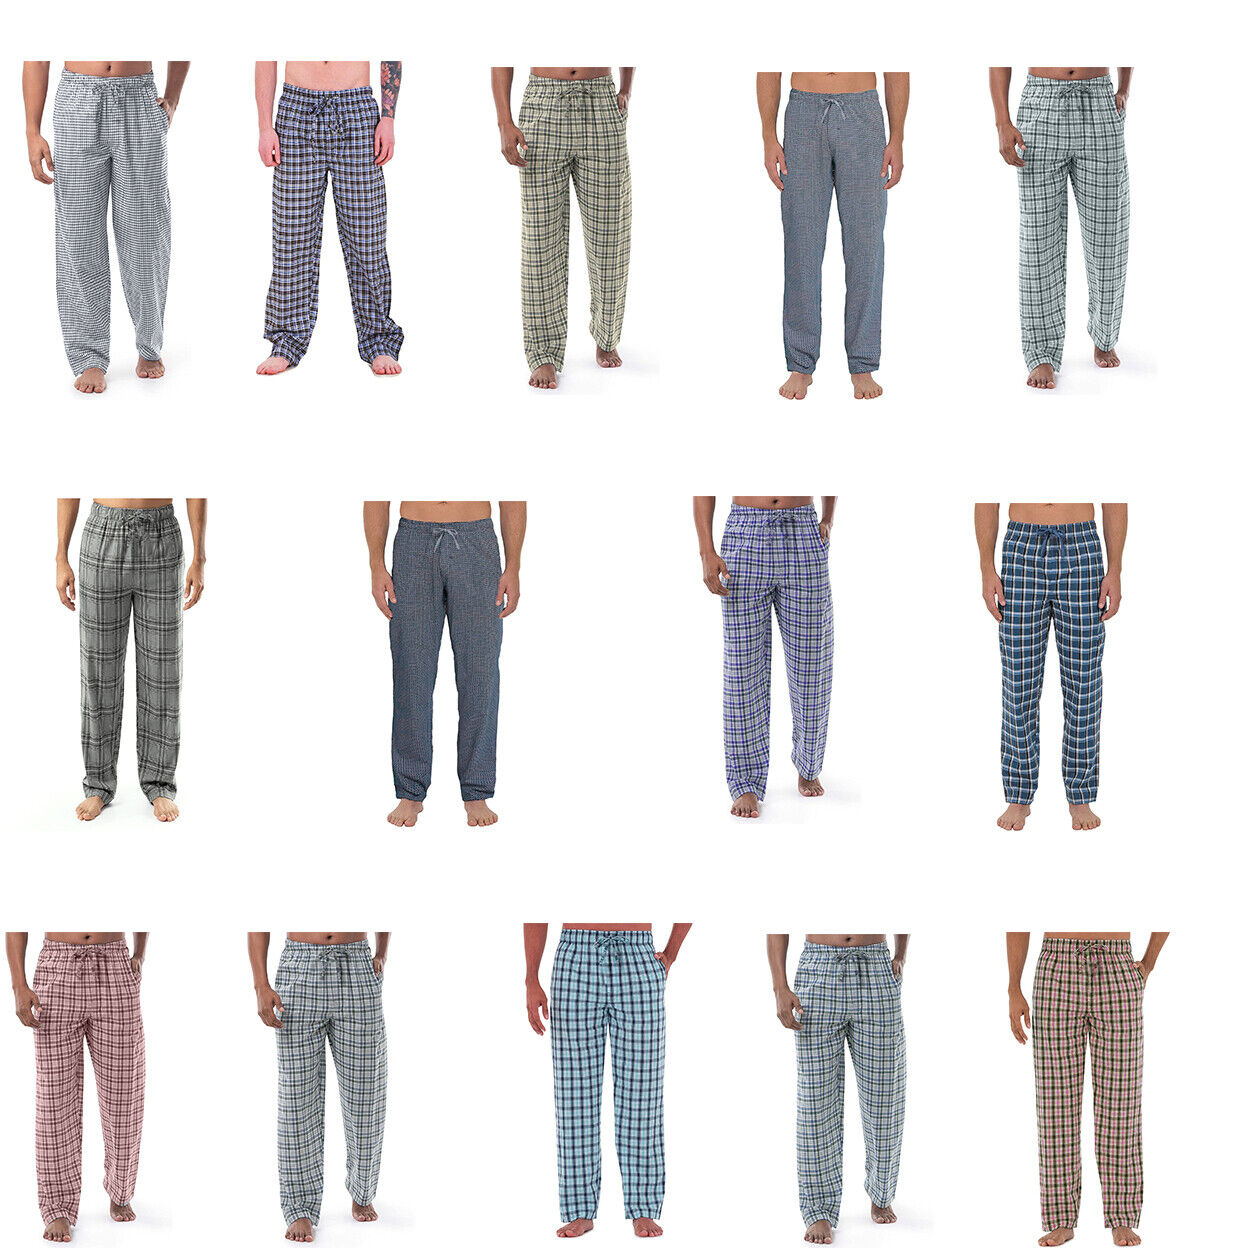 Men's Ultra-Soft Plaid Cotton Jersey Knit Comfy Sleep Lounge Pajama Pants - Grey, Xx-large